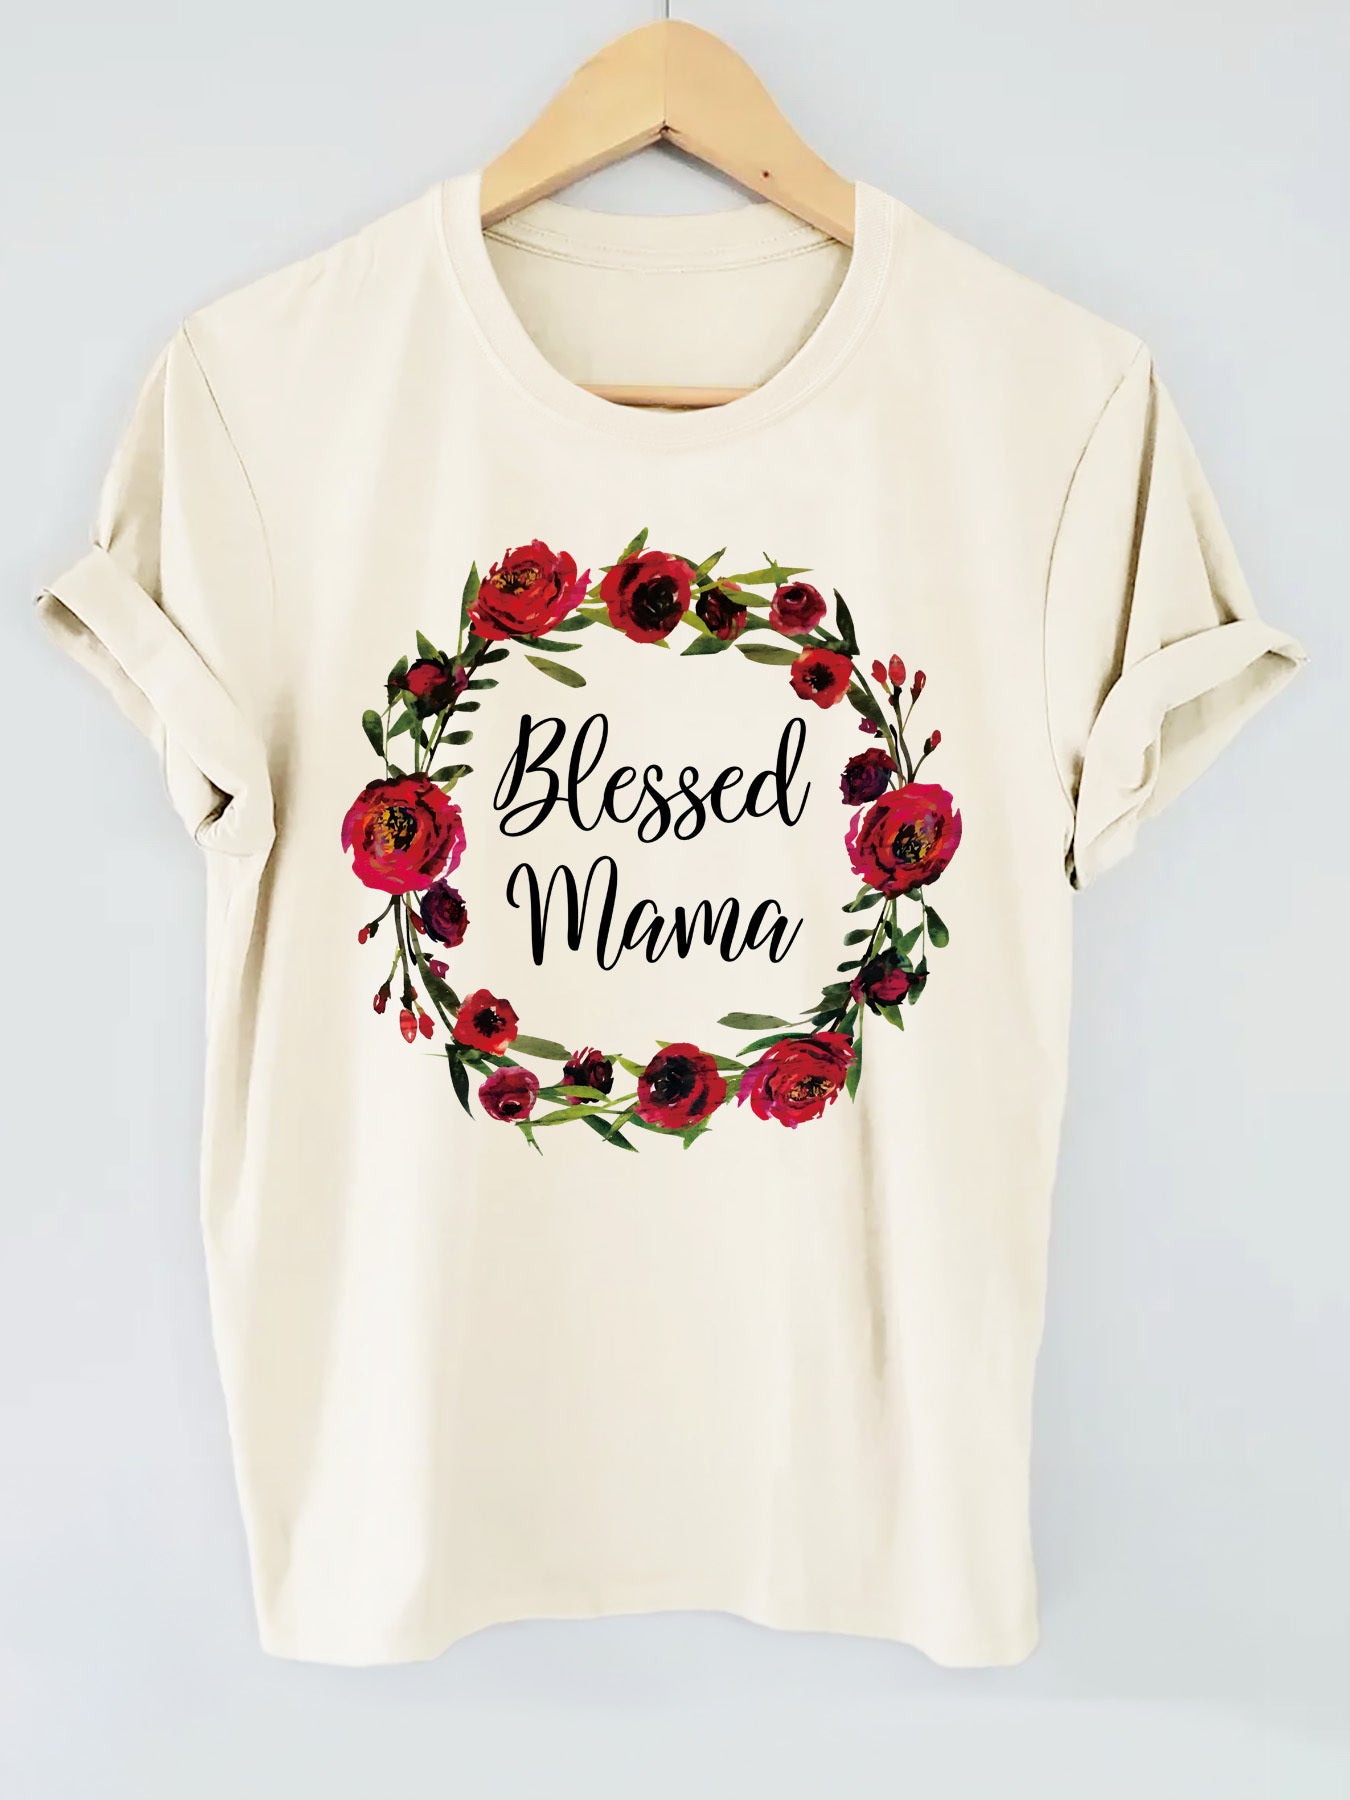 Blessed Mama Women's Christian T-shirt claimedbygoddesigns